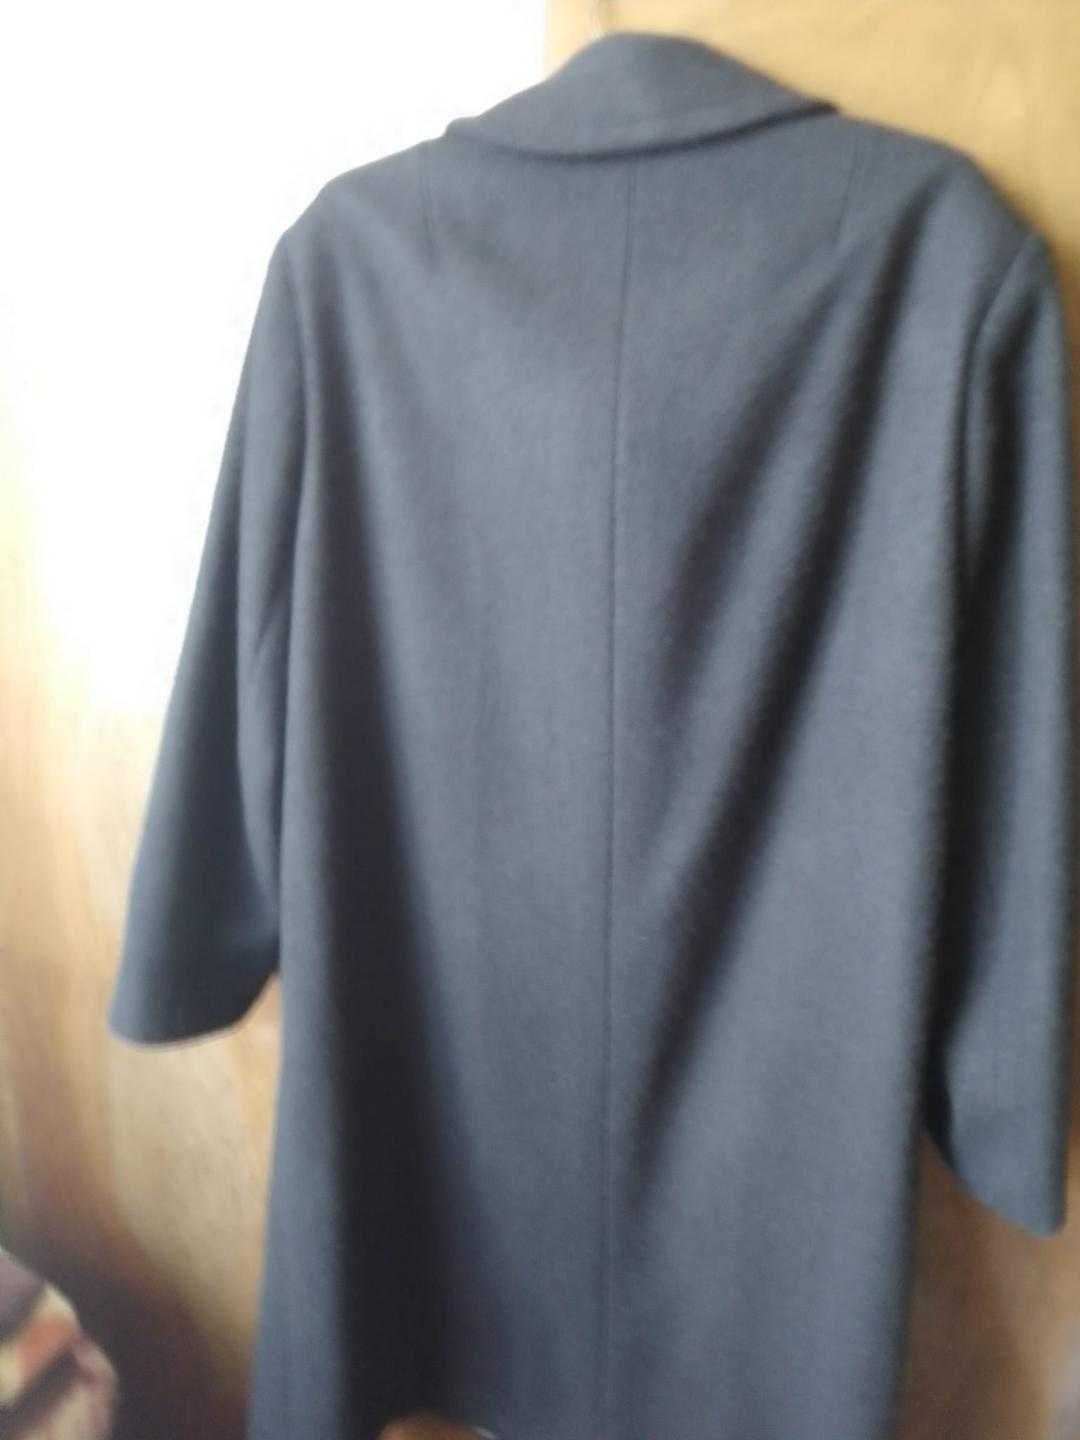 Palton negru din stofa de lana mar 50-54